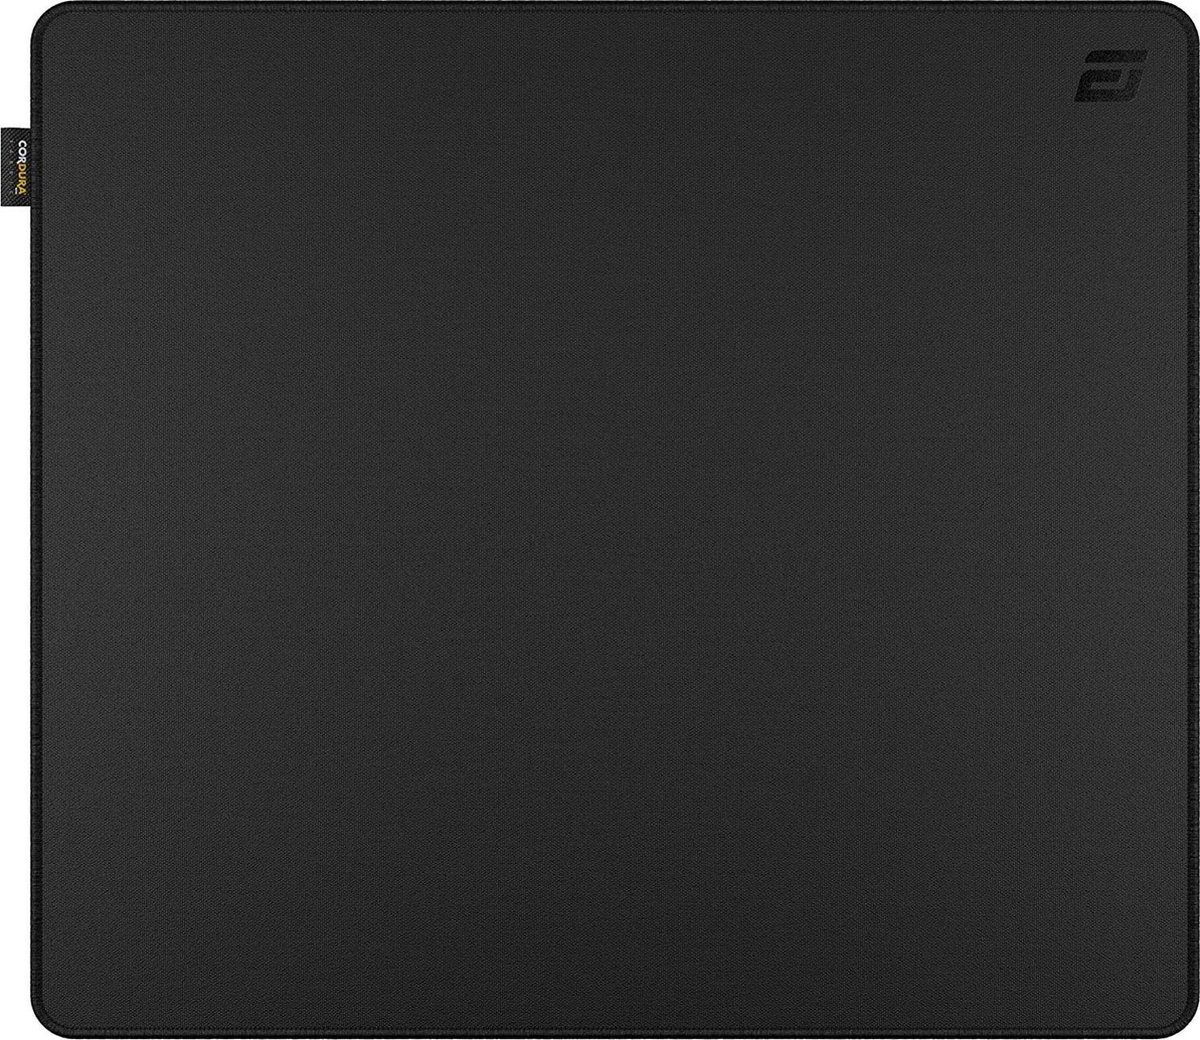 Endgame Gear MPC450 Cordura - Muismat - Met Cordura stof - 450 x 400 mm - Zwart